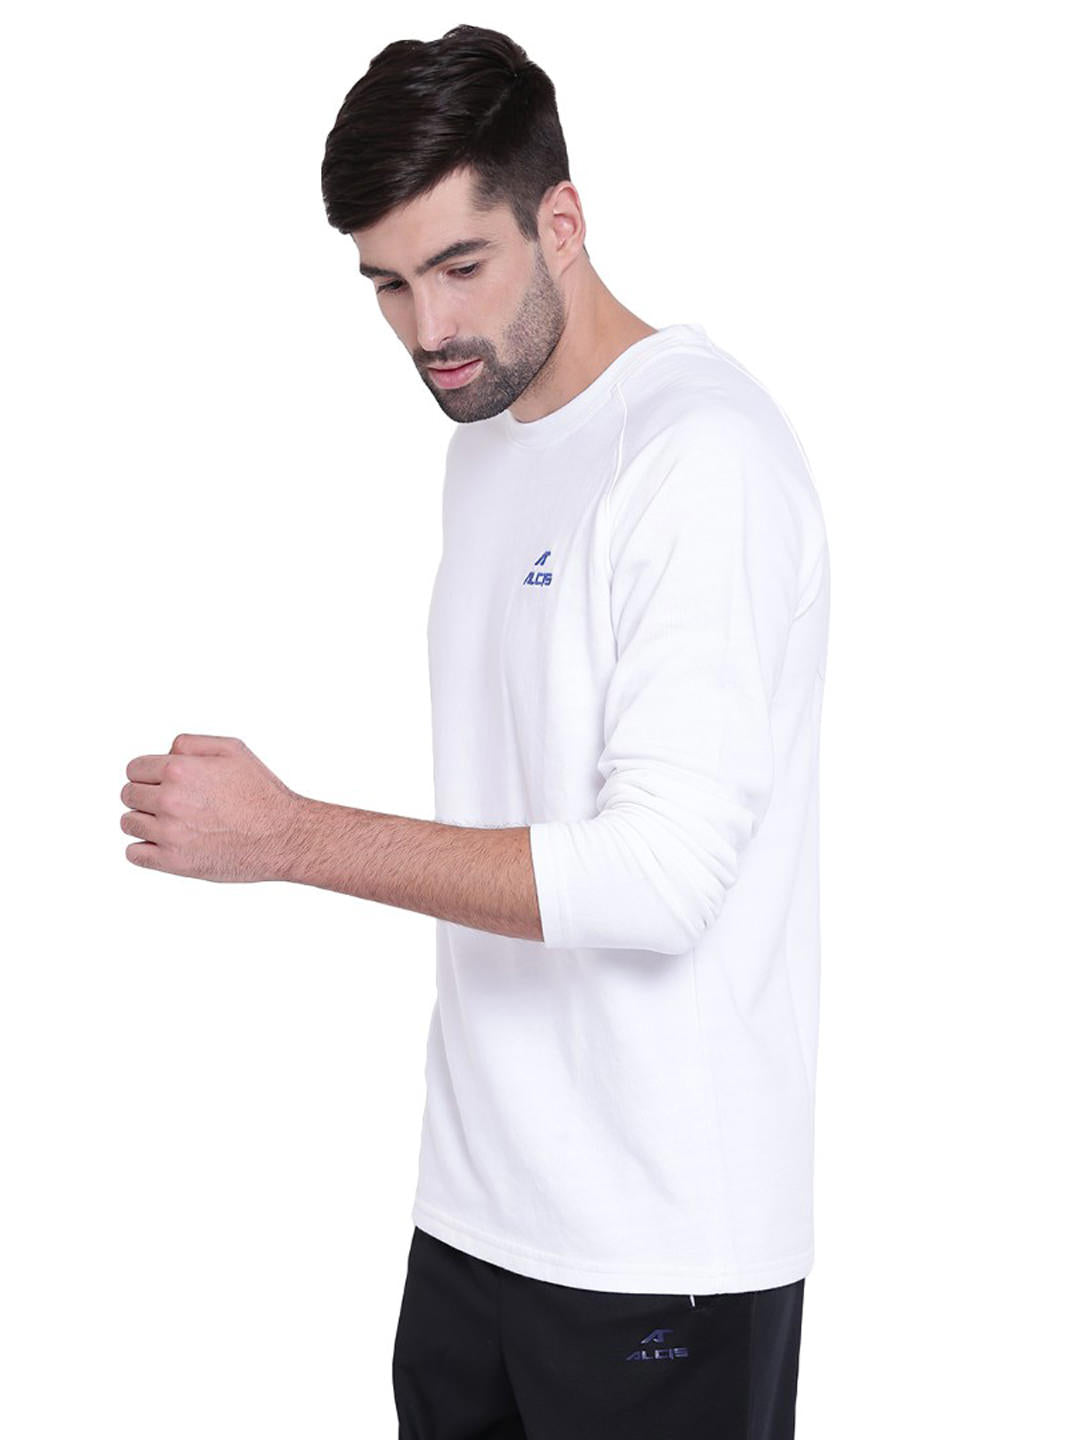 Alcis Men White Solid Sweatshirt SWT1003002